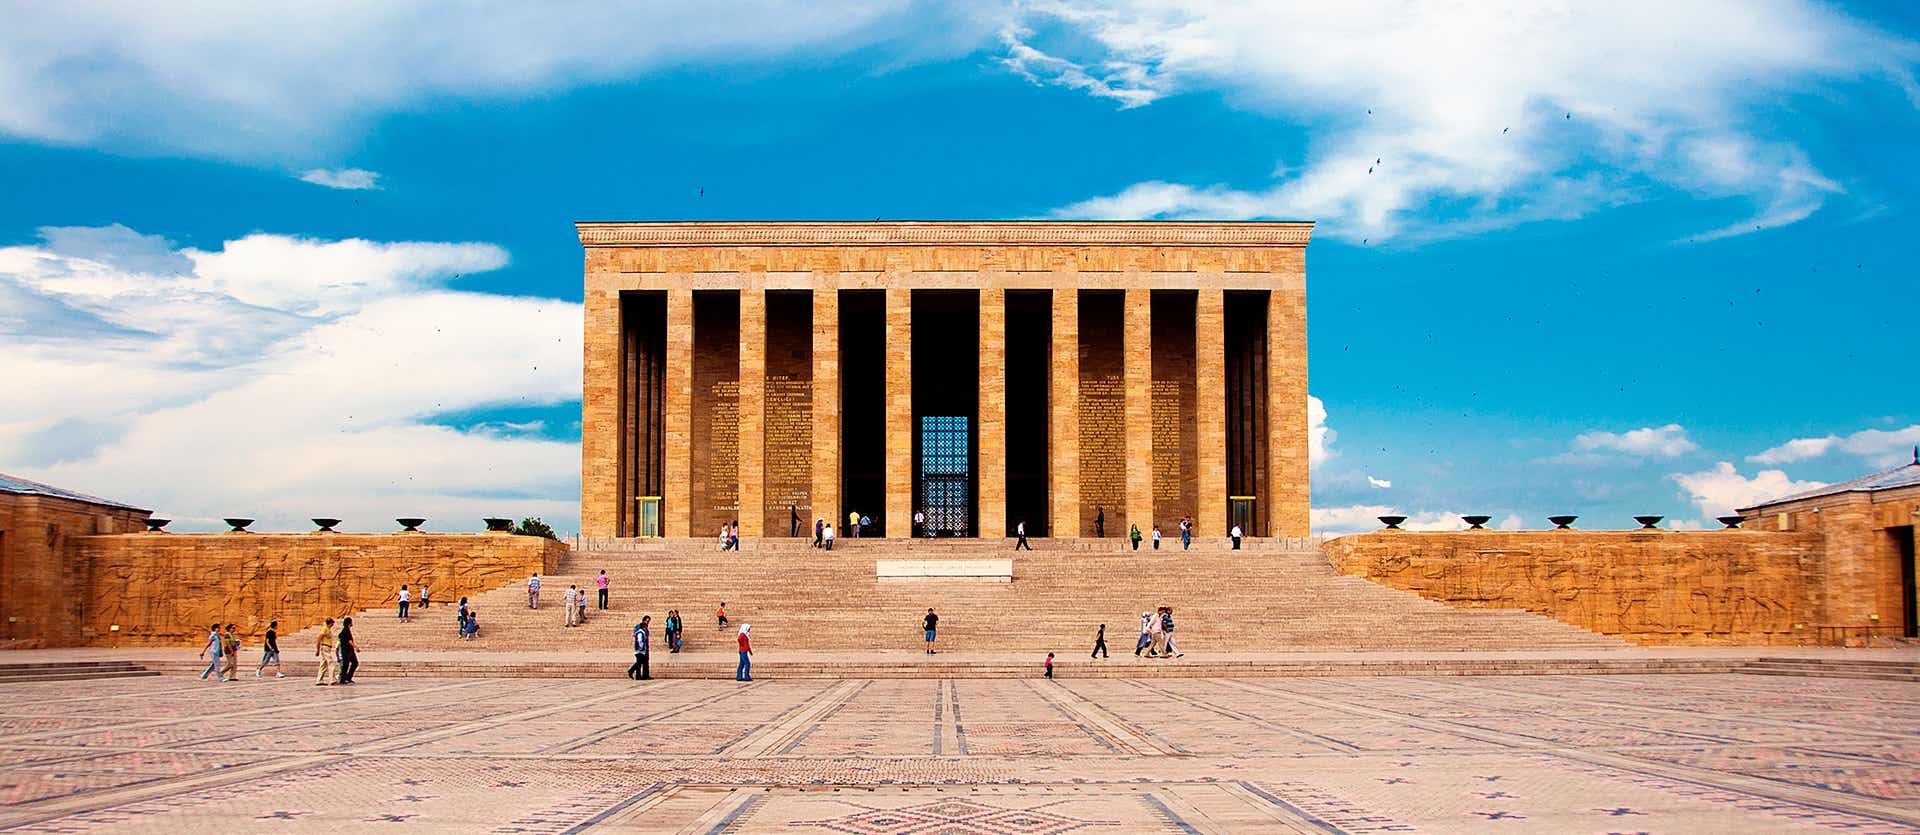 Mausoleum of Ataturk <span class="iconos separador"></span> Ankara <span class="iconos separador"></span> Turkey